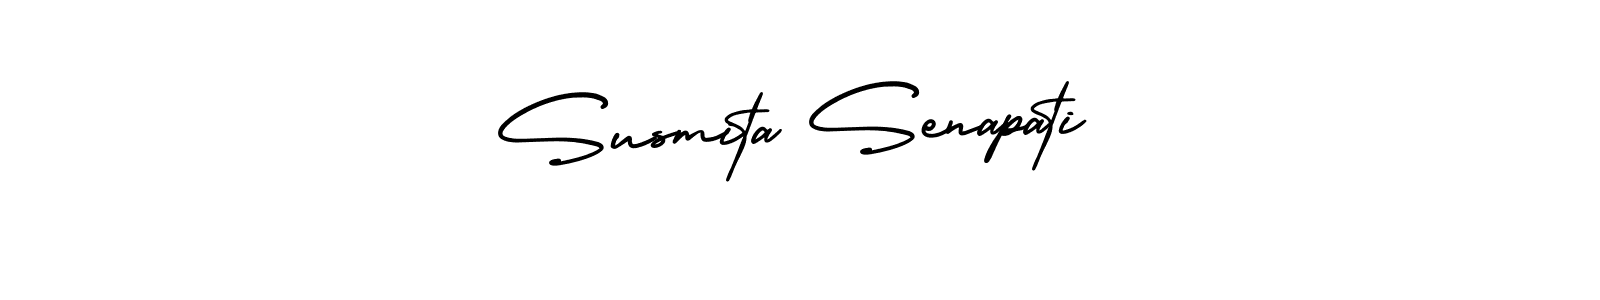 Design your own signature with our free online signature maker. With this signature software, you can create a handwritten (AmerikaSignatureDemo-Regular) signature for name Susmita Senapati. Susmita Senapati signature style 3 images and pictures png